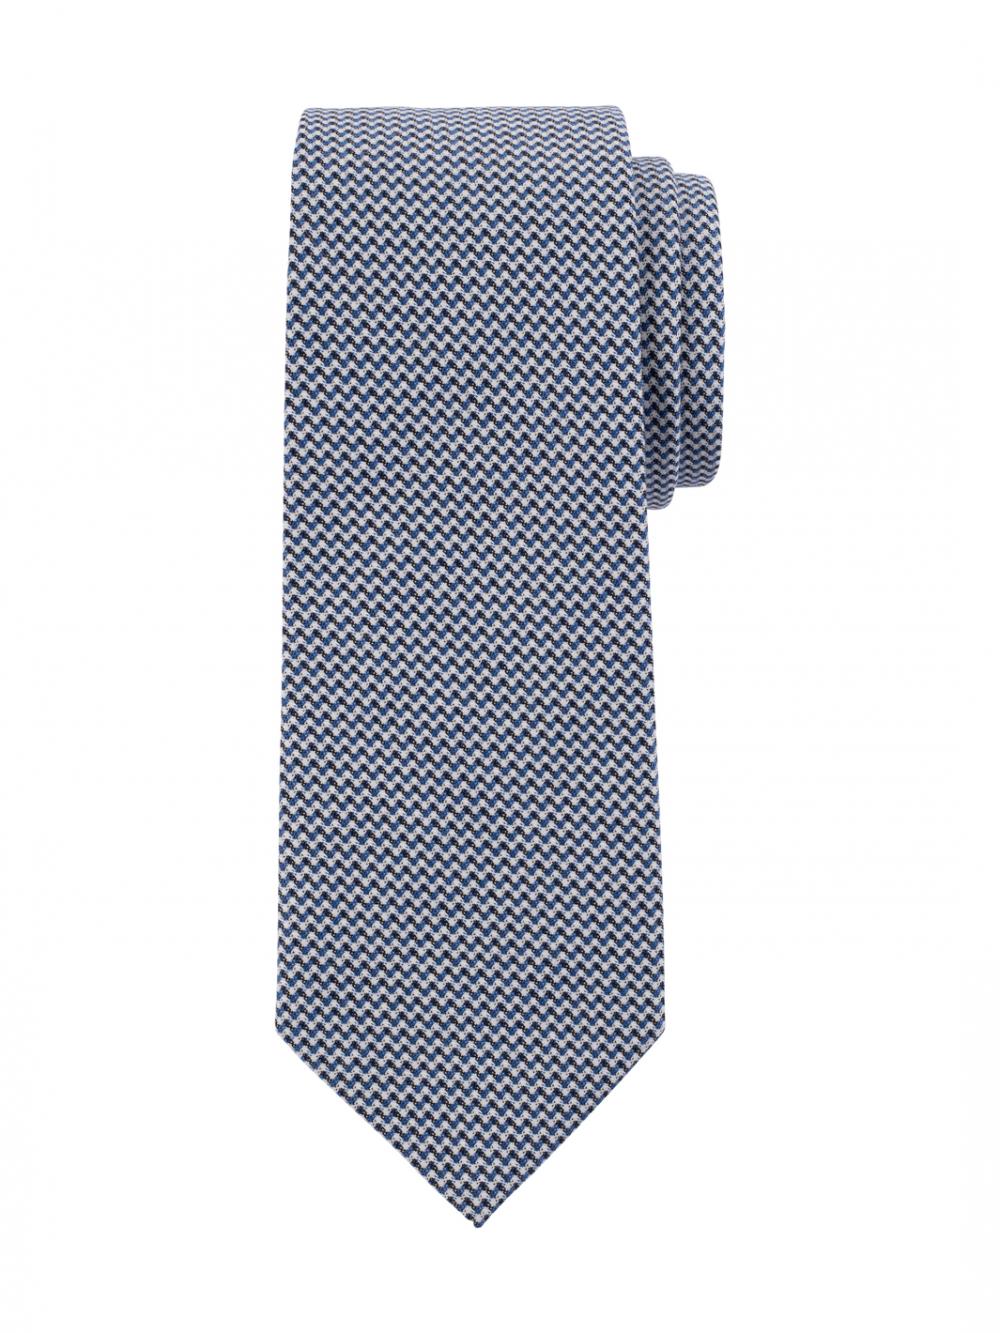 krawattenhalter gris Grey Men fashion veneno regalo hombres Mode Tie hanger 